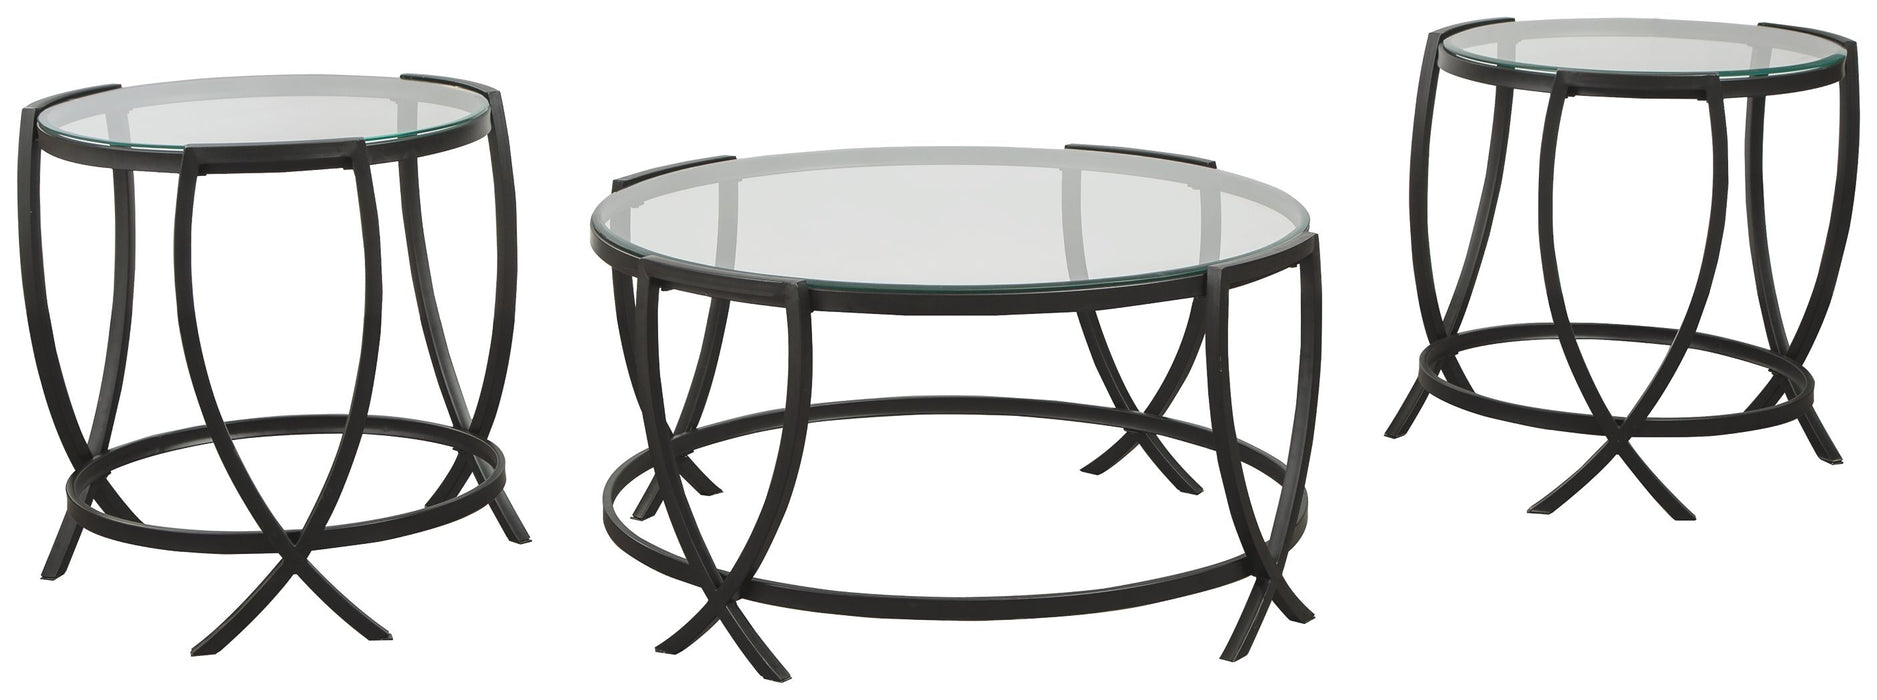 Tarrin - Black - Occasional Table Set (Set of 3) Unique Piece Furniture Furniture Store in Dallas and Acworth, GA serving Marietta, Alpharetta, Kennesaw, Milton